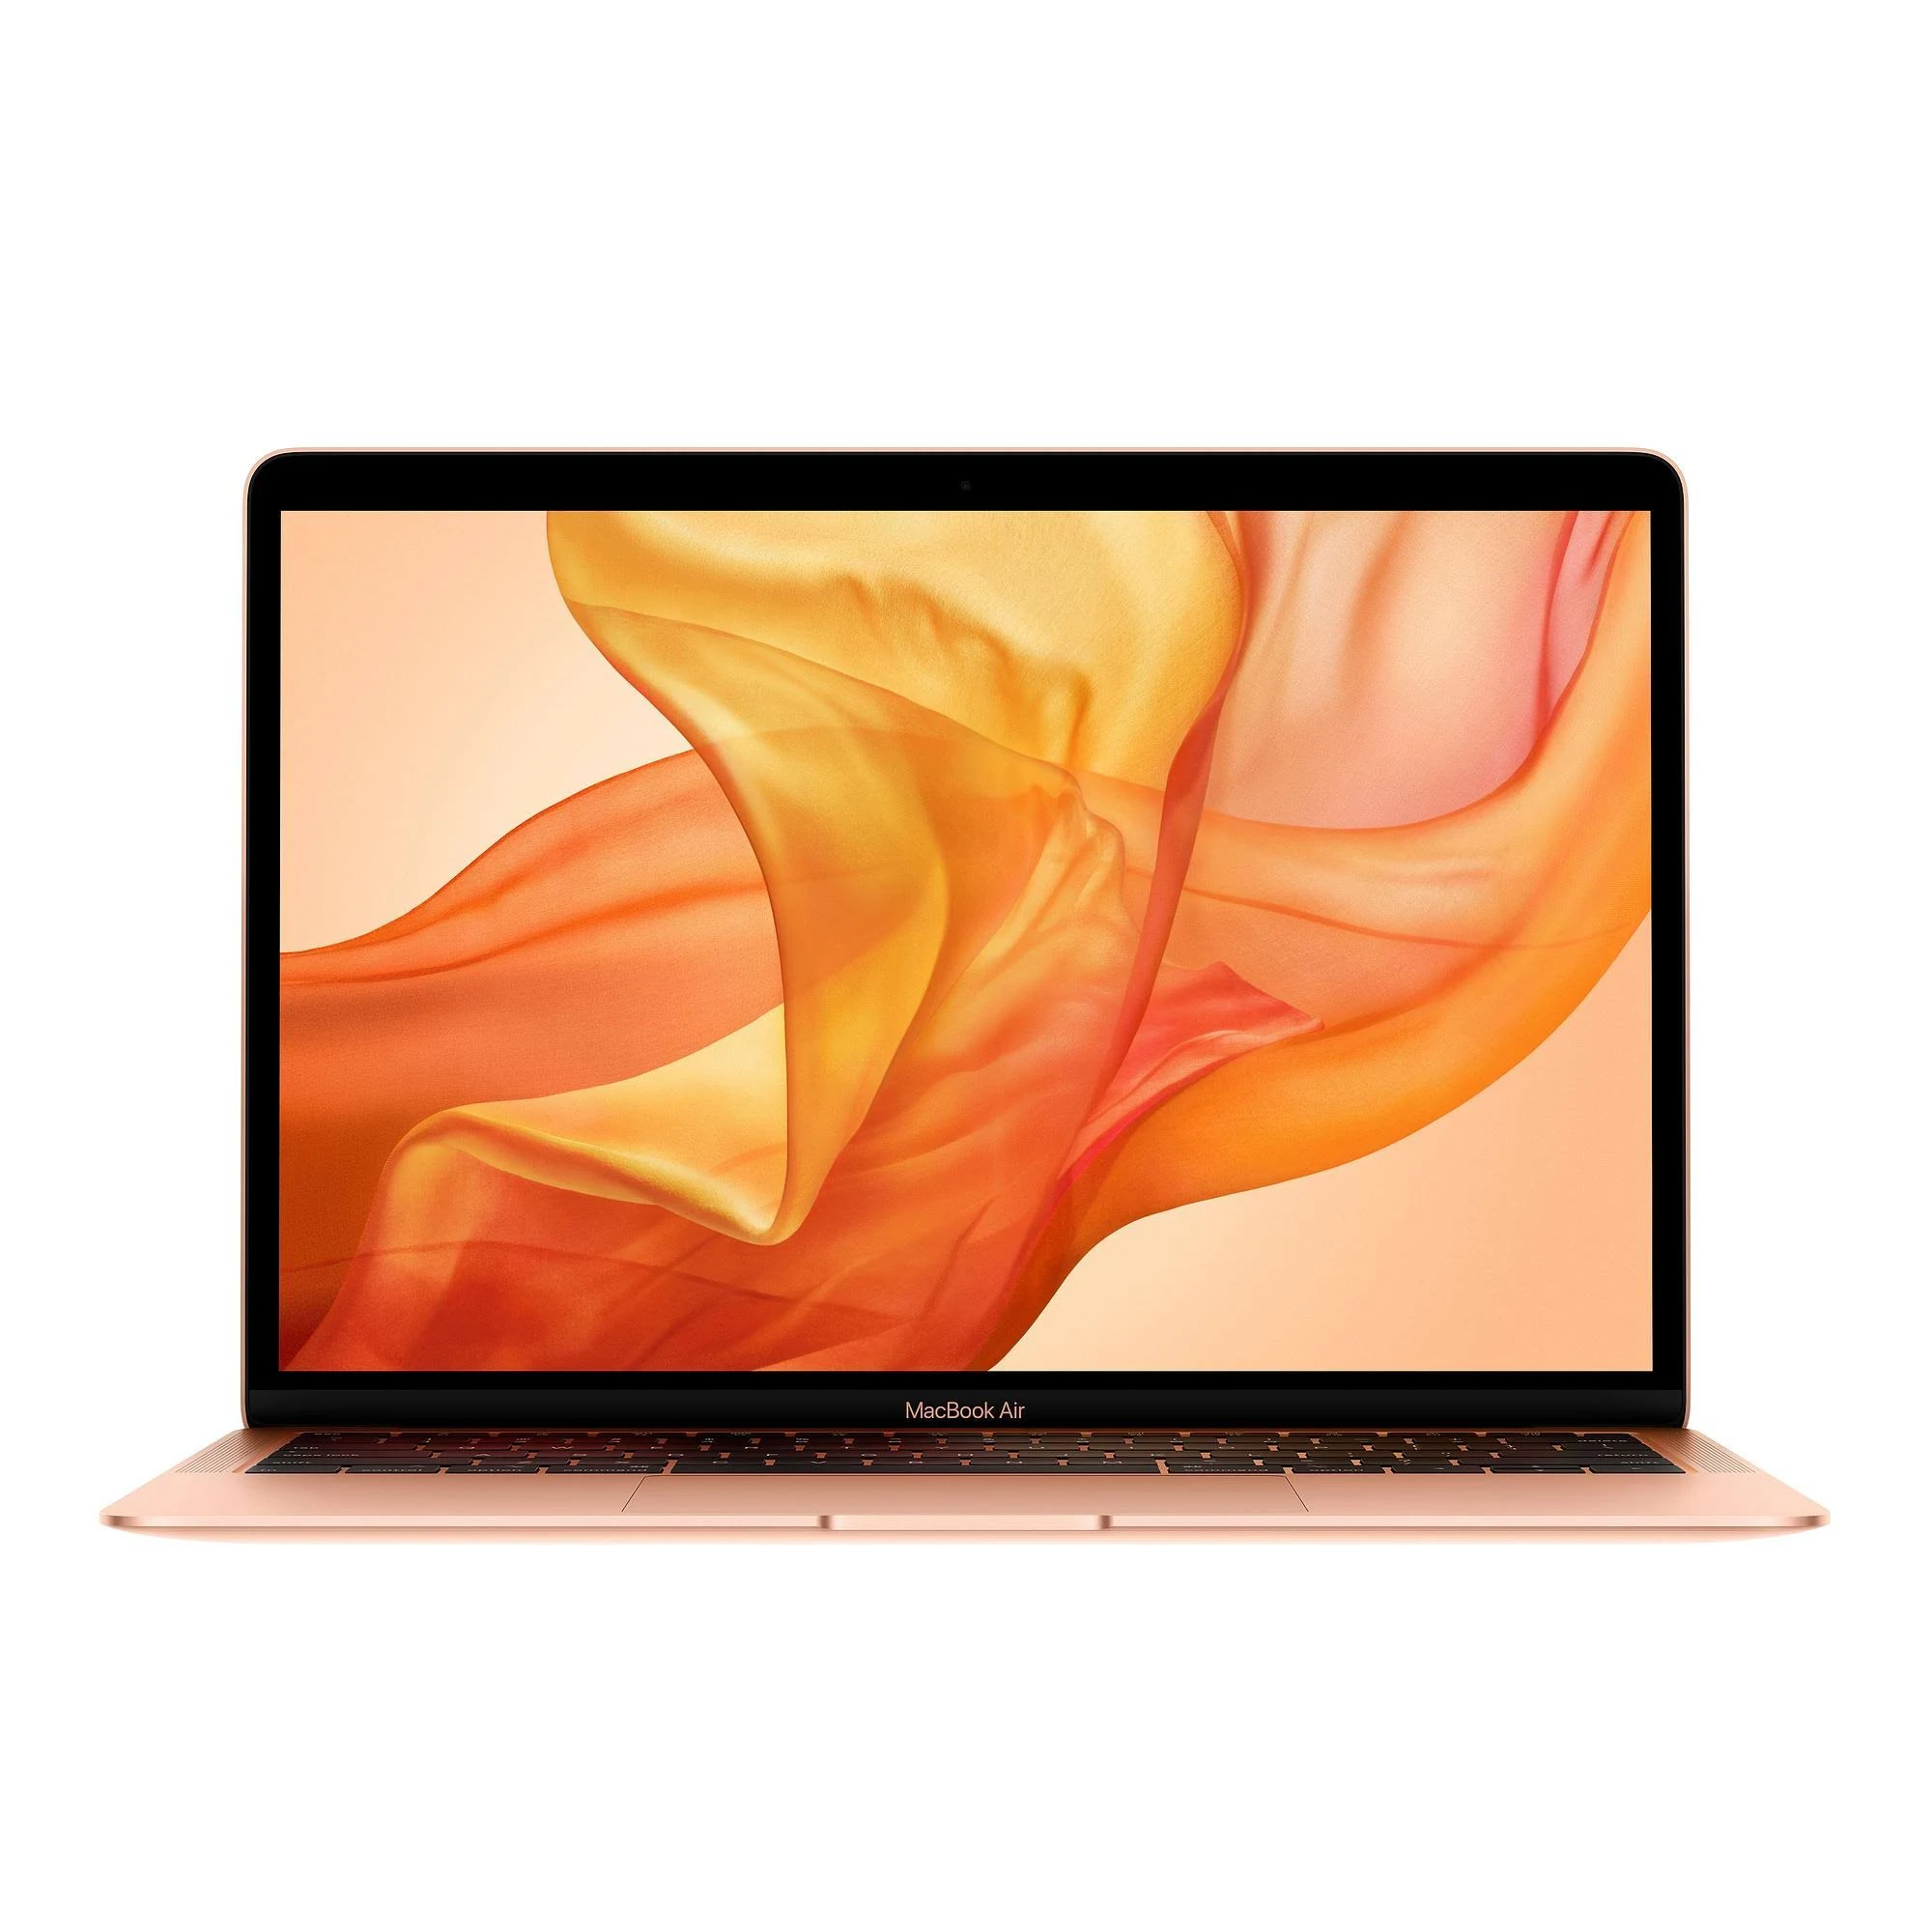 MacBook Air 13 inch True Tone 2019 i5 1.6GHz - 512GB SSD - 8GB Ram 512GB Gold Fair